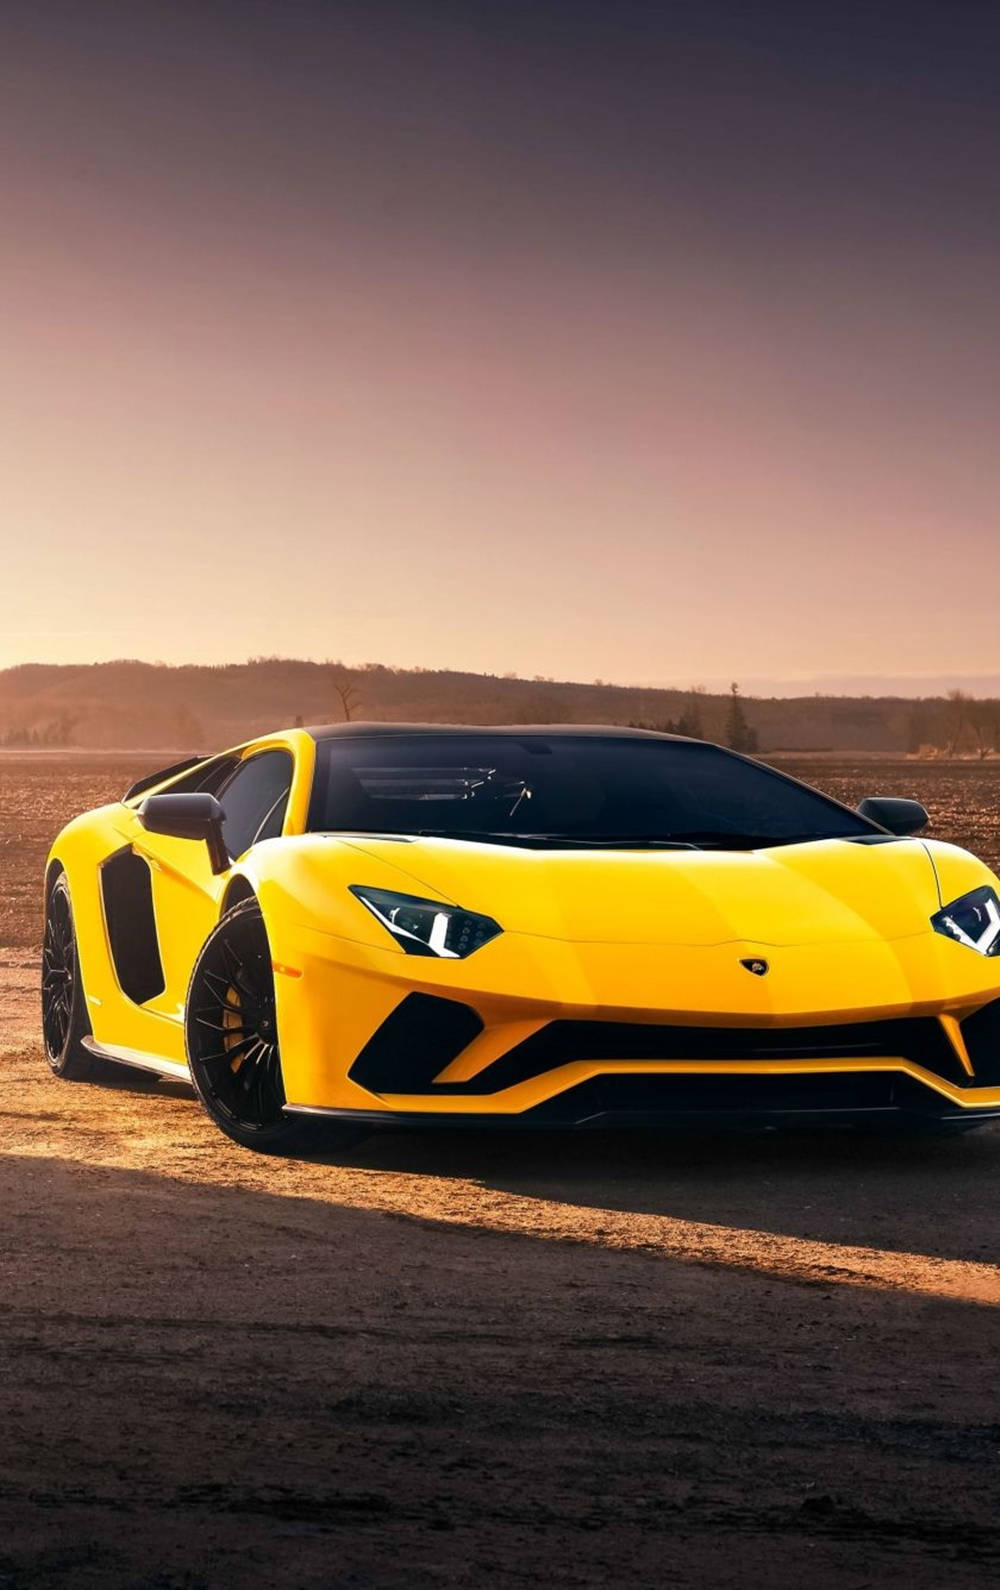 Lamborghini iPhone Yellow Aesthetic In Desert Wallpaper